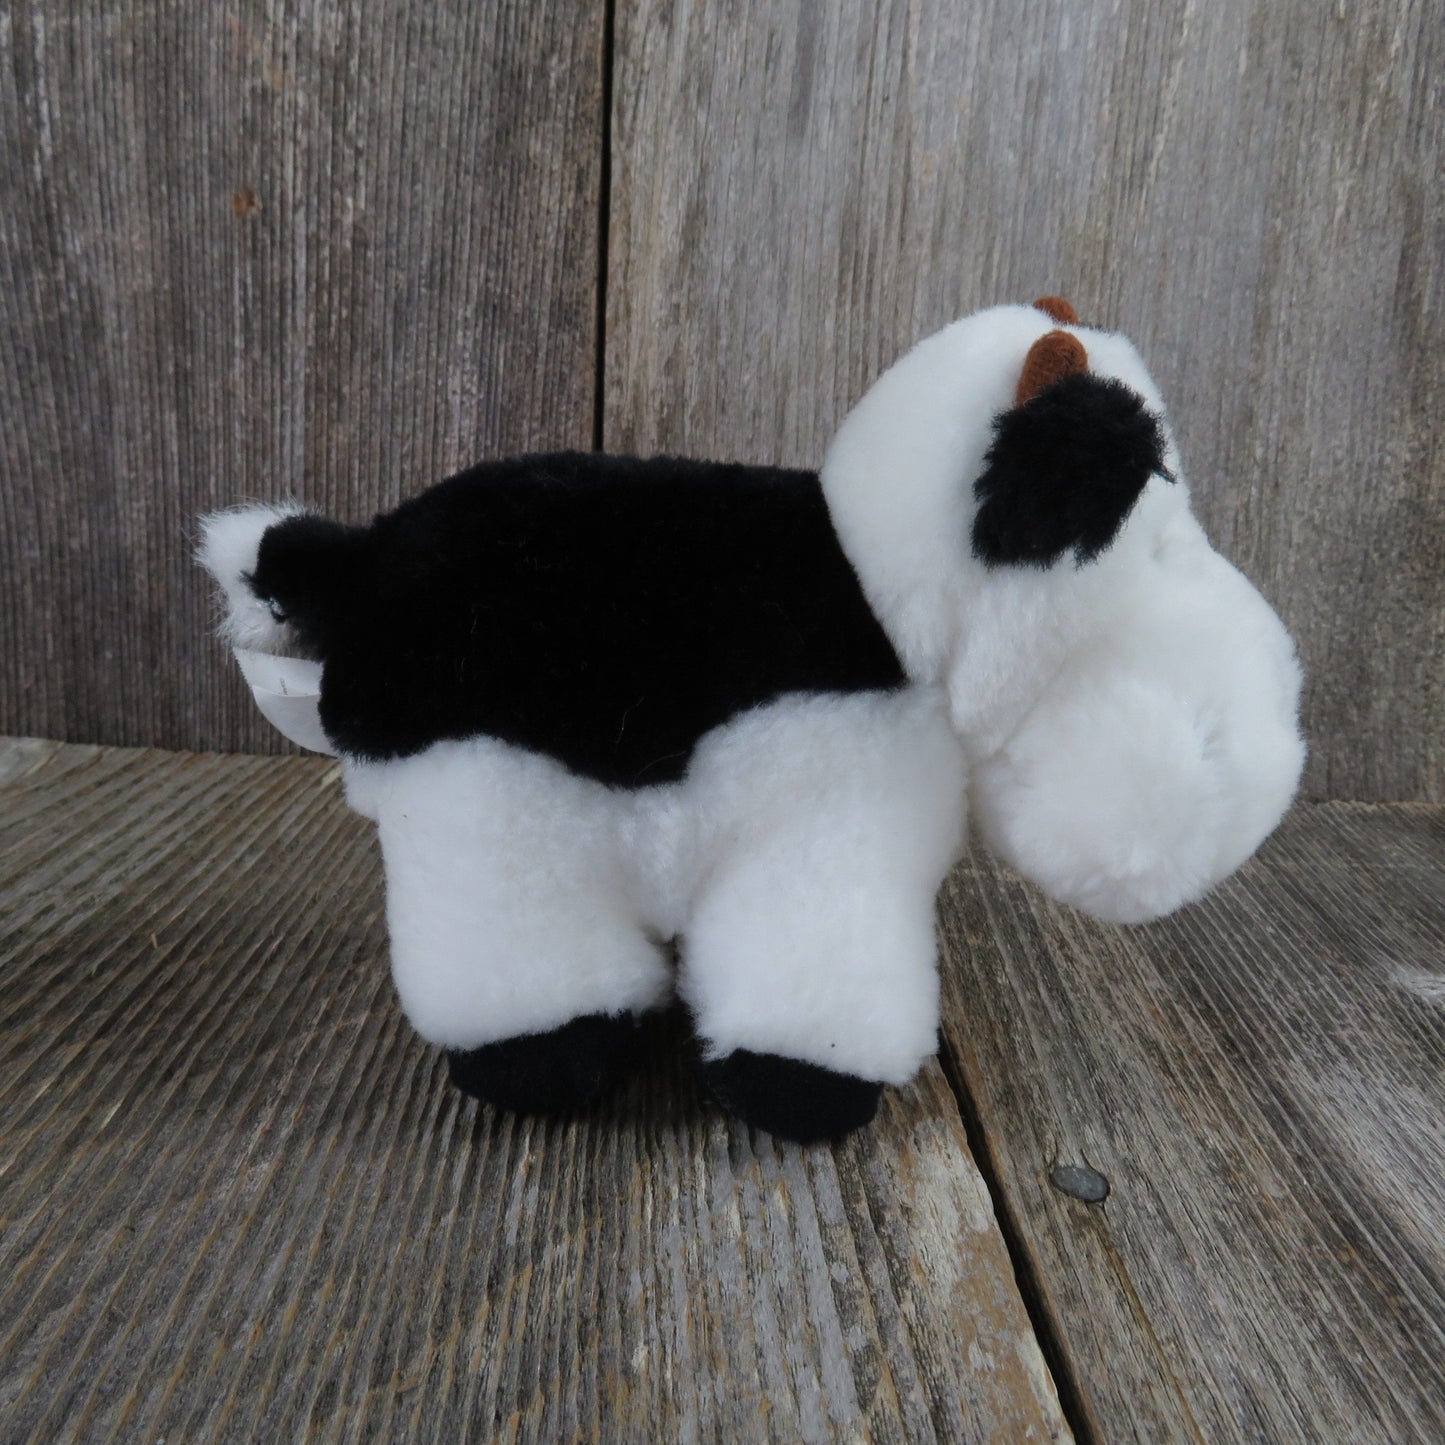 Vintage Cow Plush Black and White Holstein Dakin Applause Stuffed Animal Mini Small